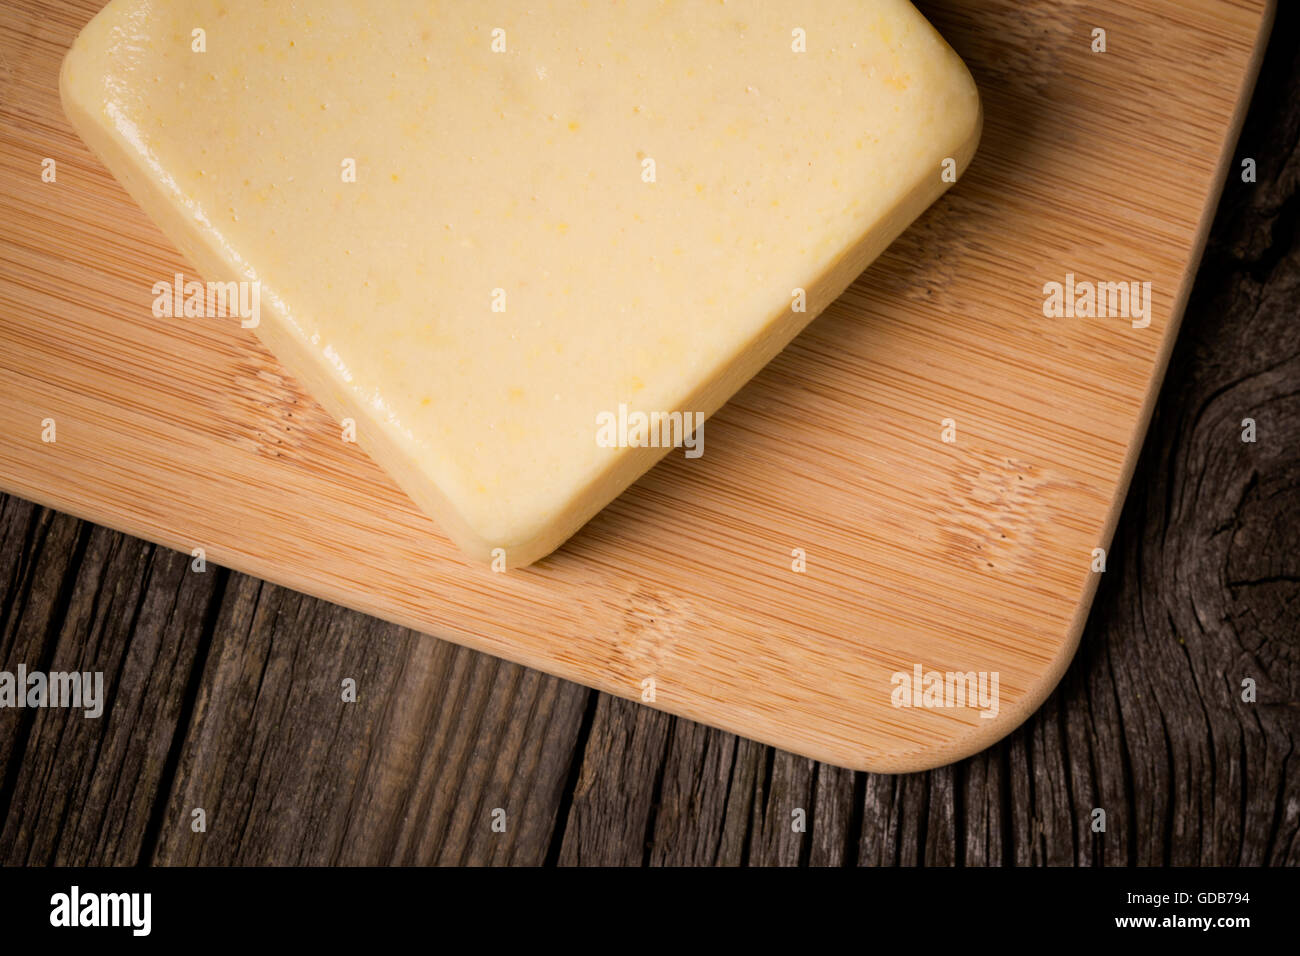 Vegan diy homemade feta cheese Stock Photo